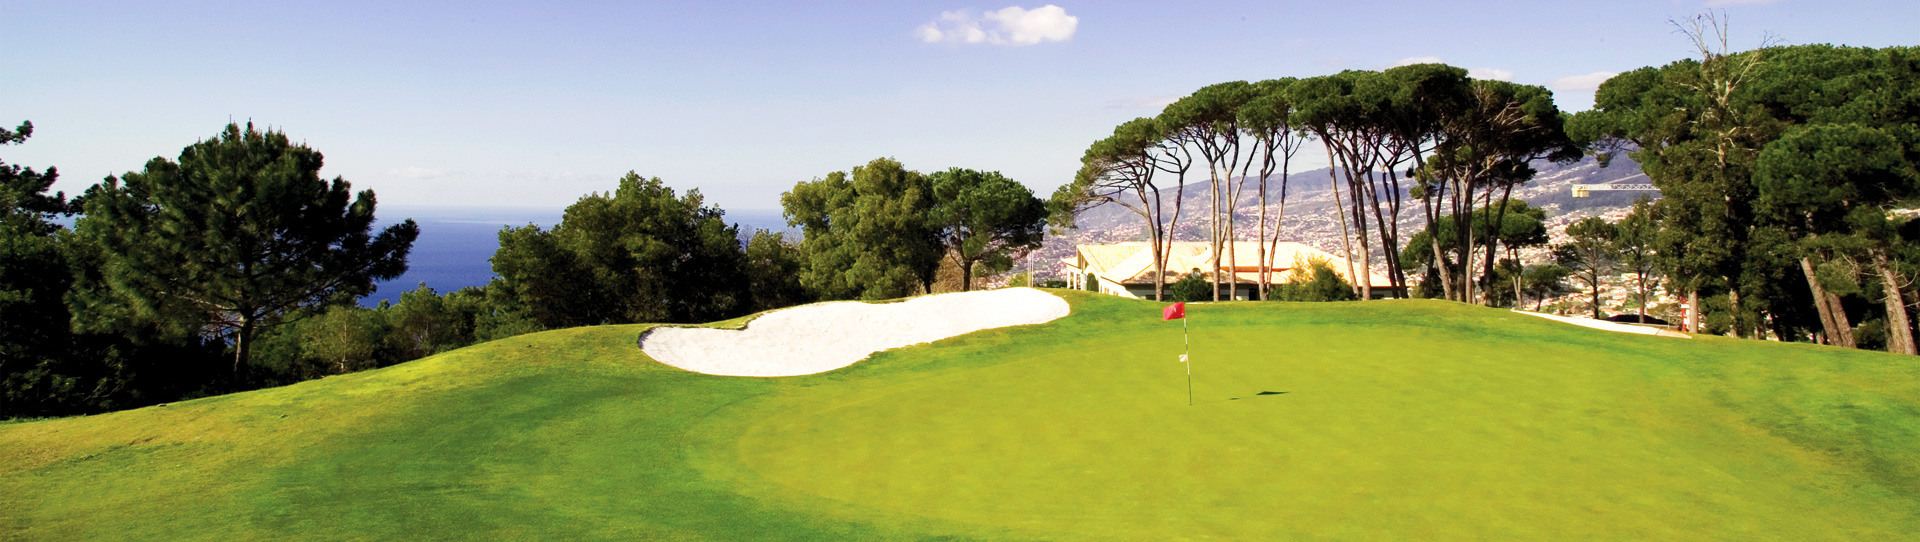 Portugal golf holidays - Madeira Golf Passport  - Photo 1